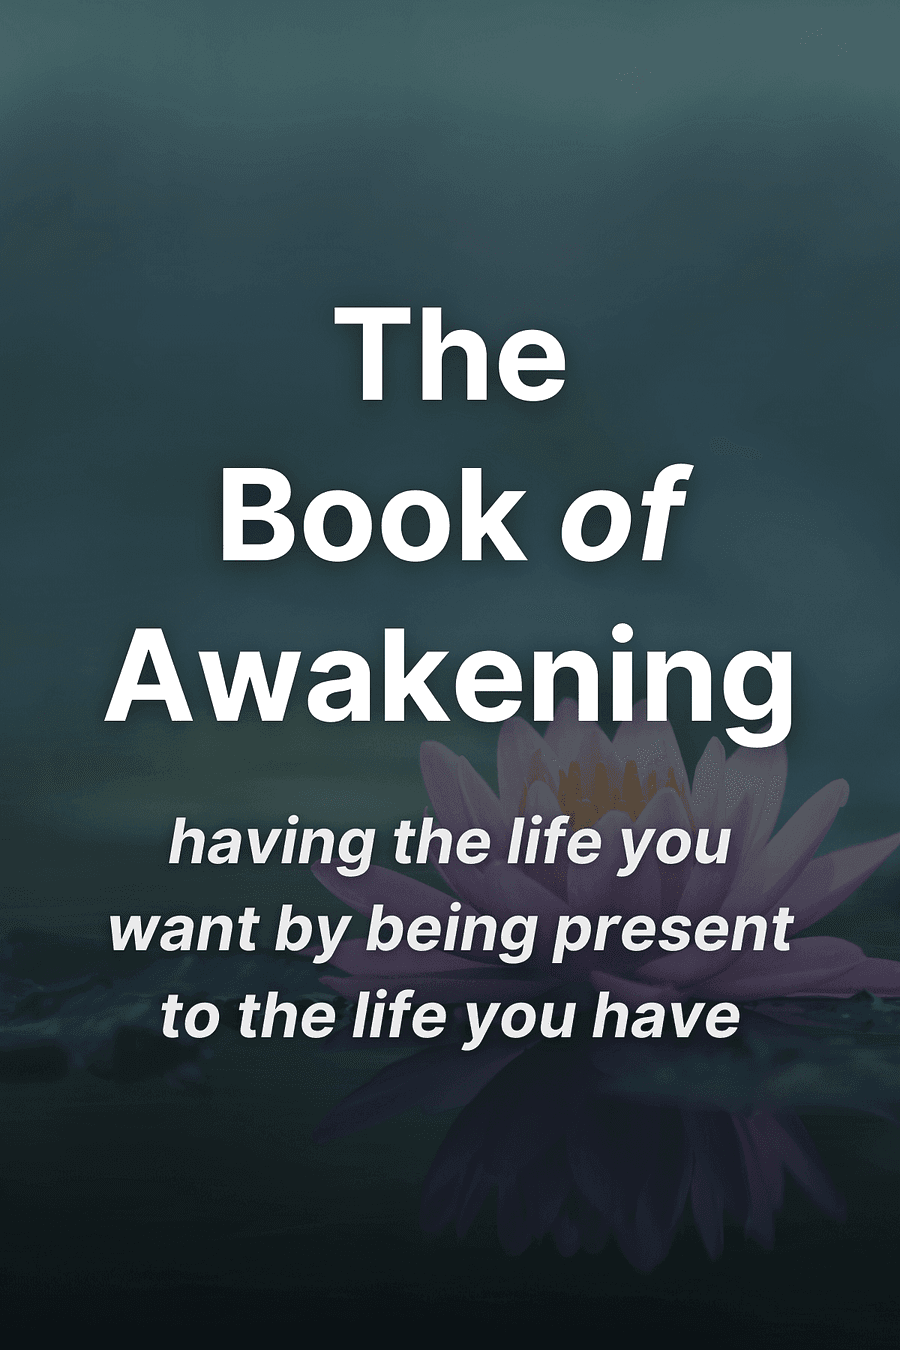 The Book of Awakening by Mark Nepo - Book Summary